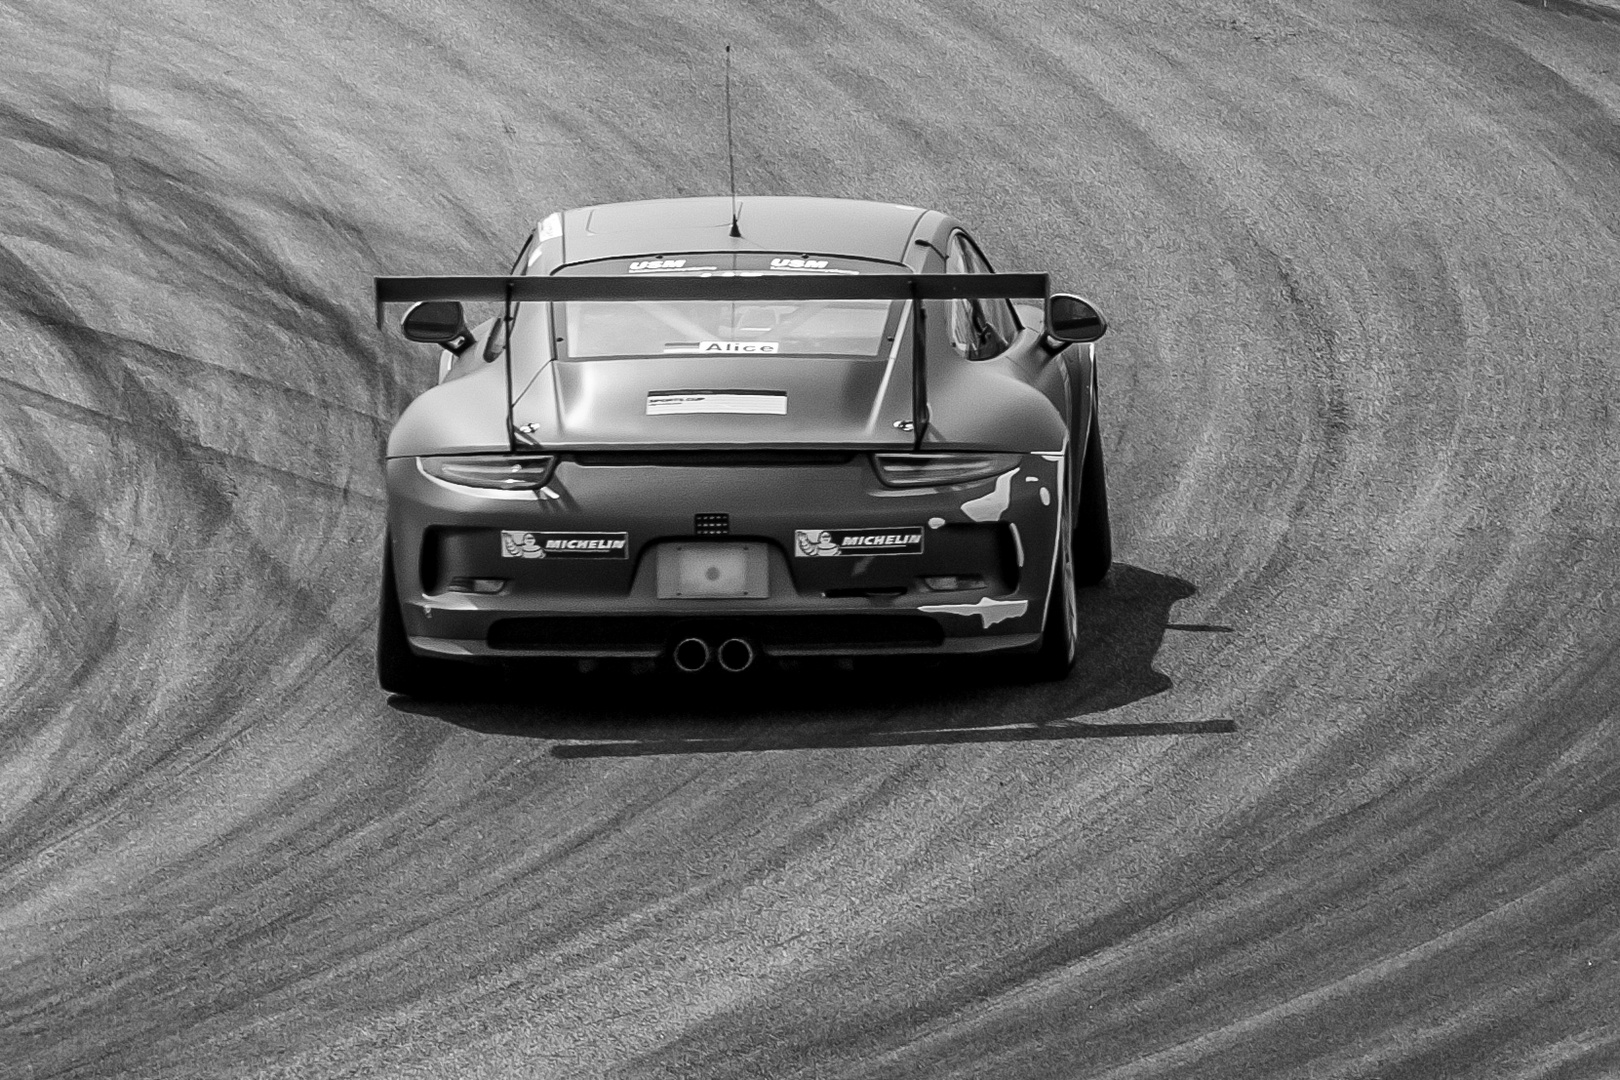 Porsche Cup Hockenheim 2016